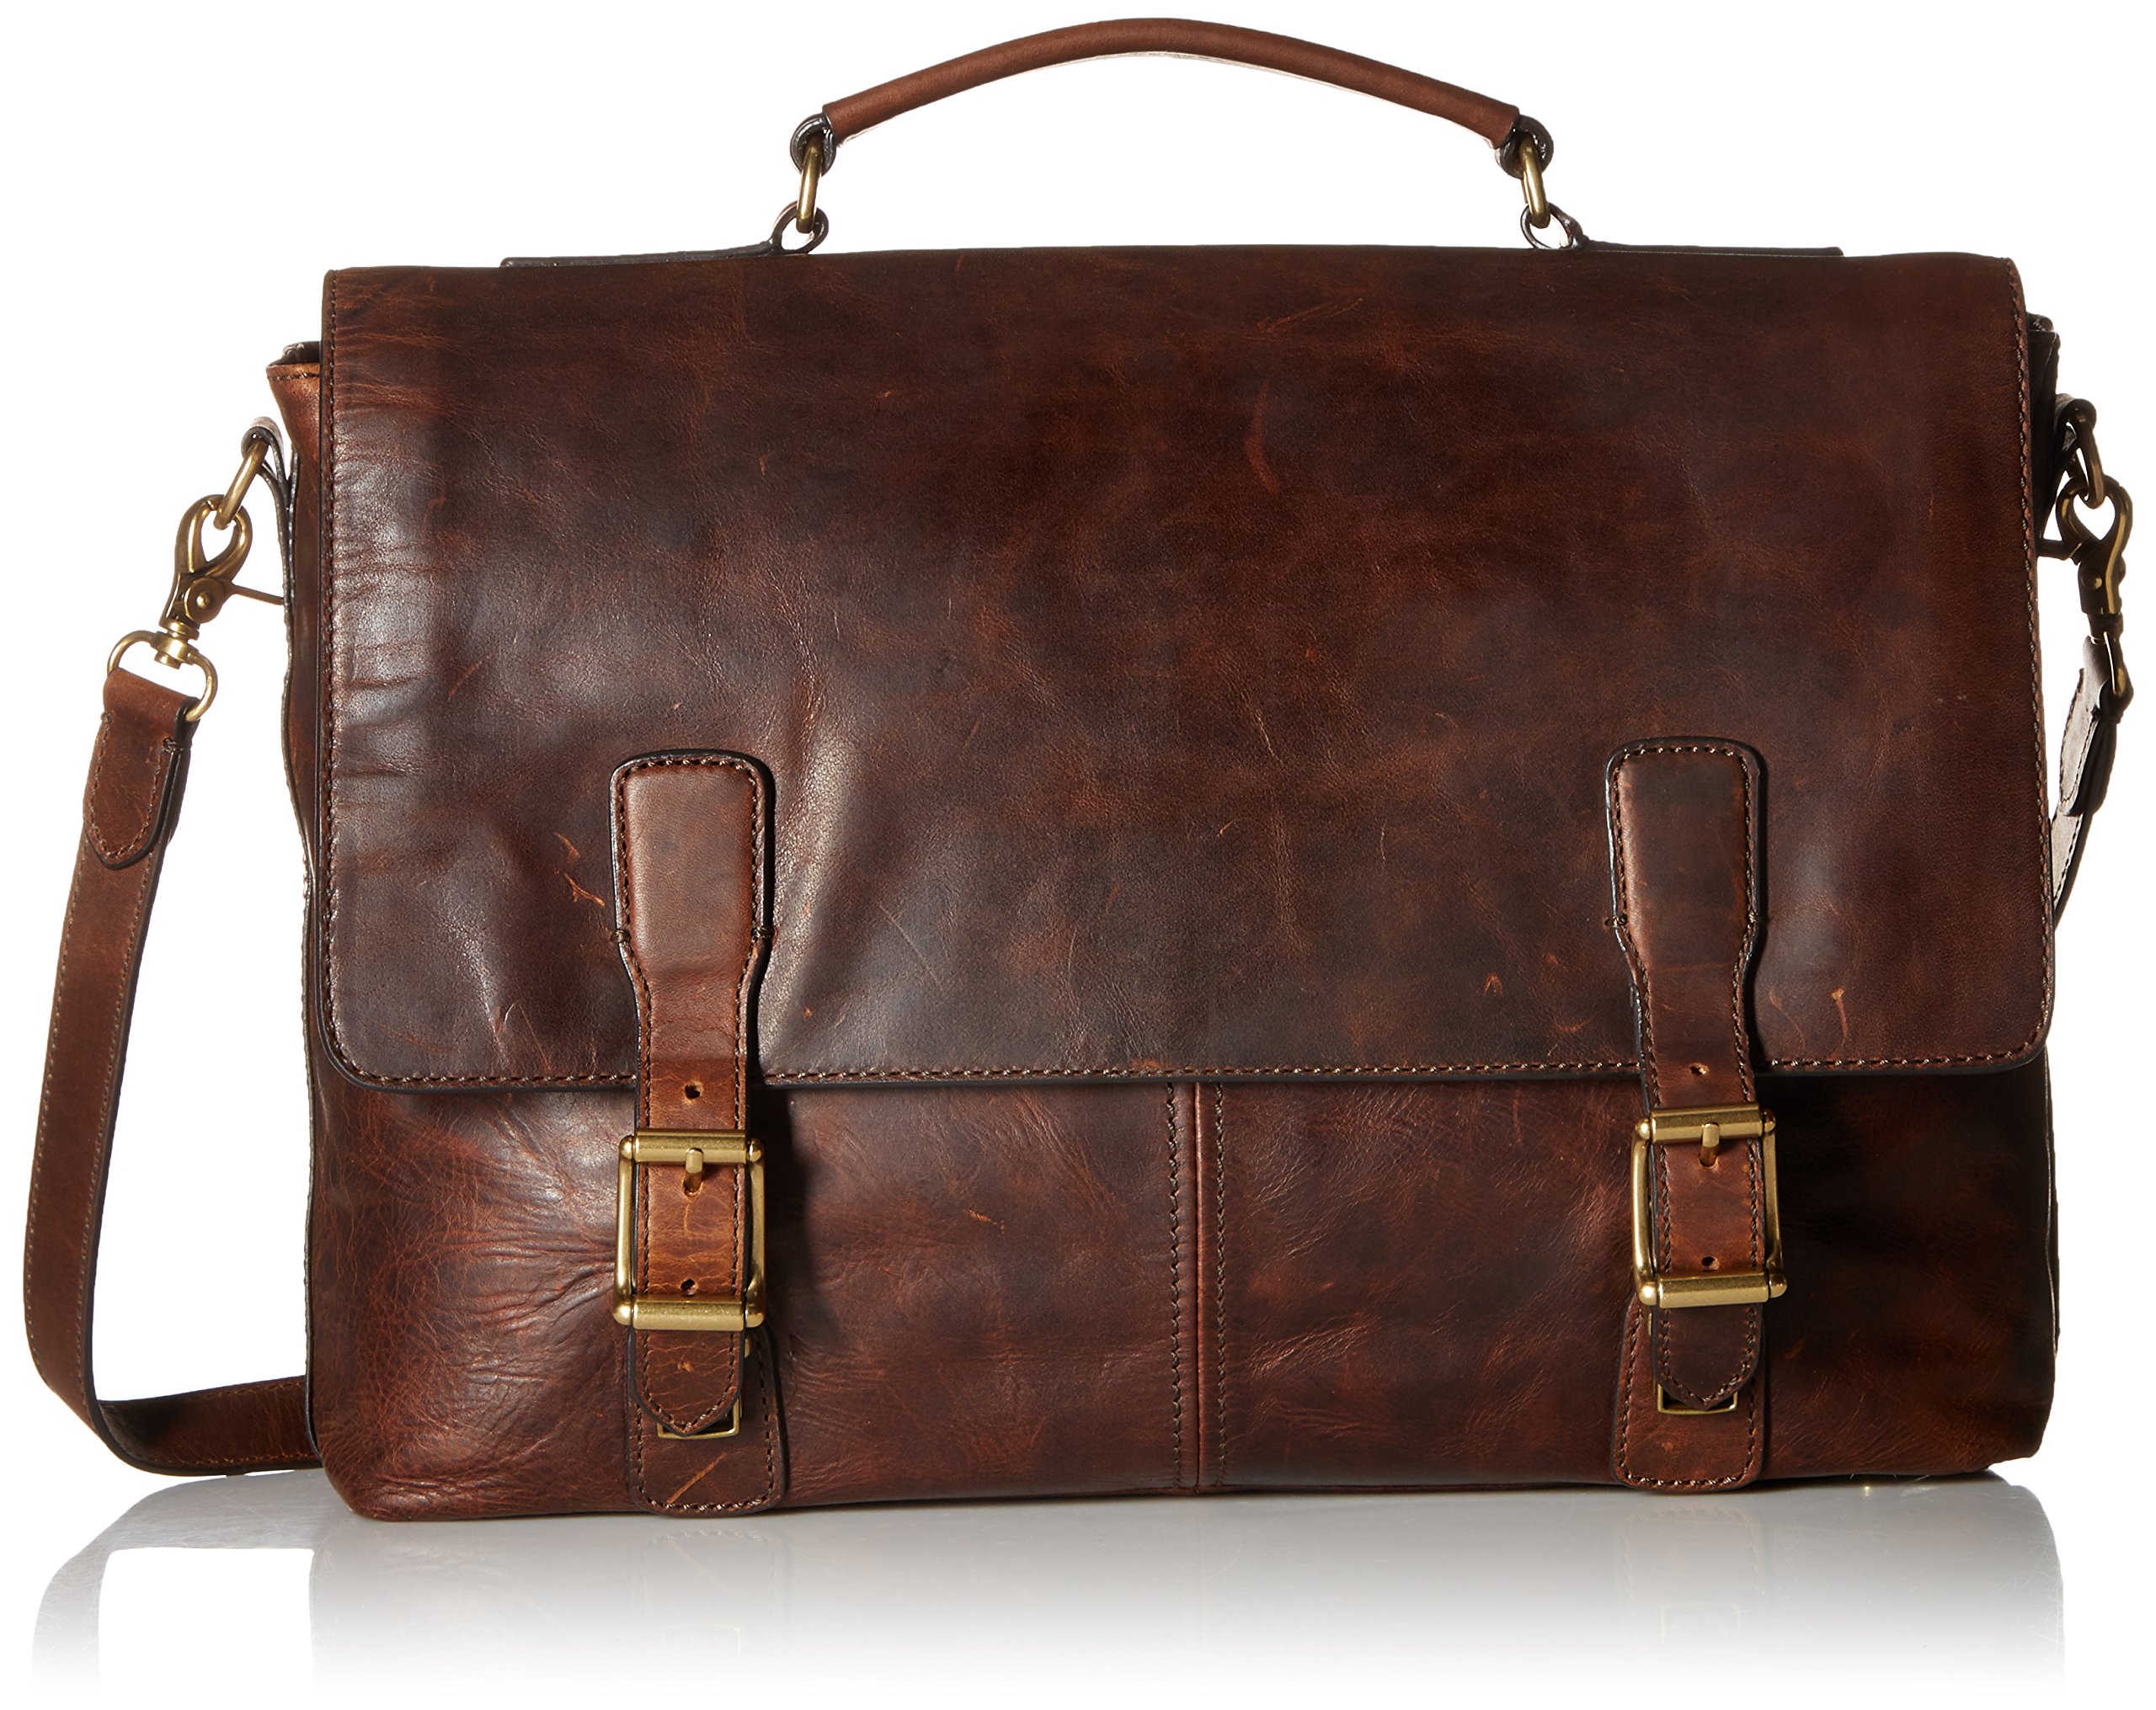 FRYE Men's Logan Top Handle Messenger Bag, Dark Brown, One Size